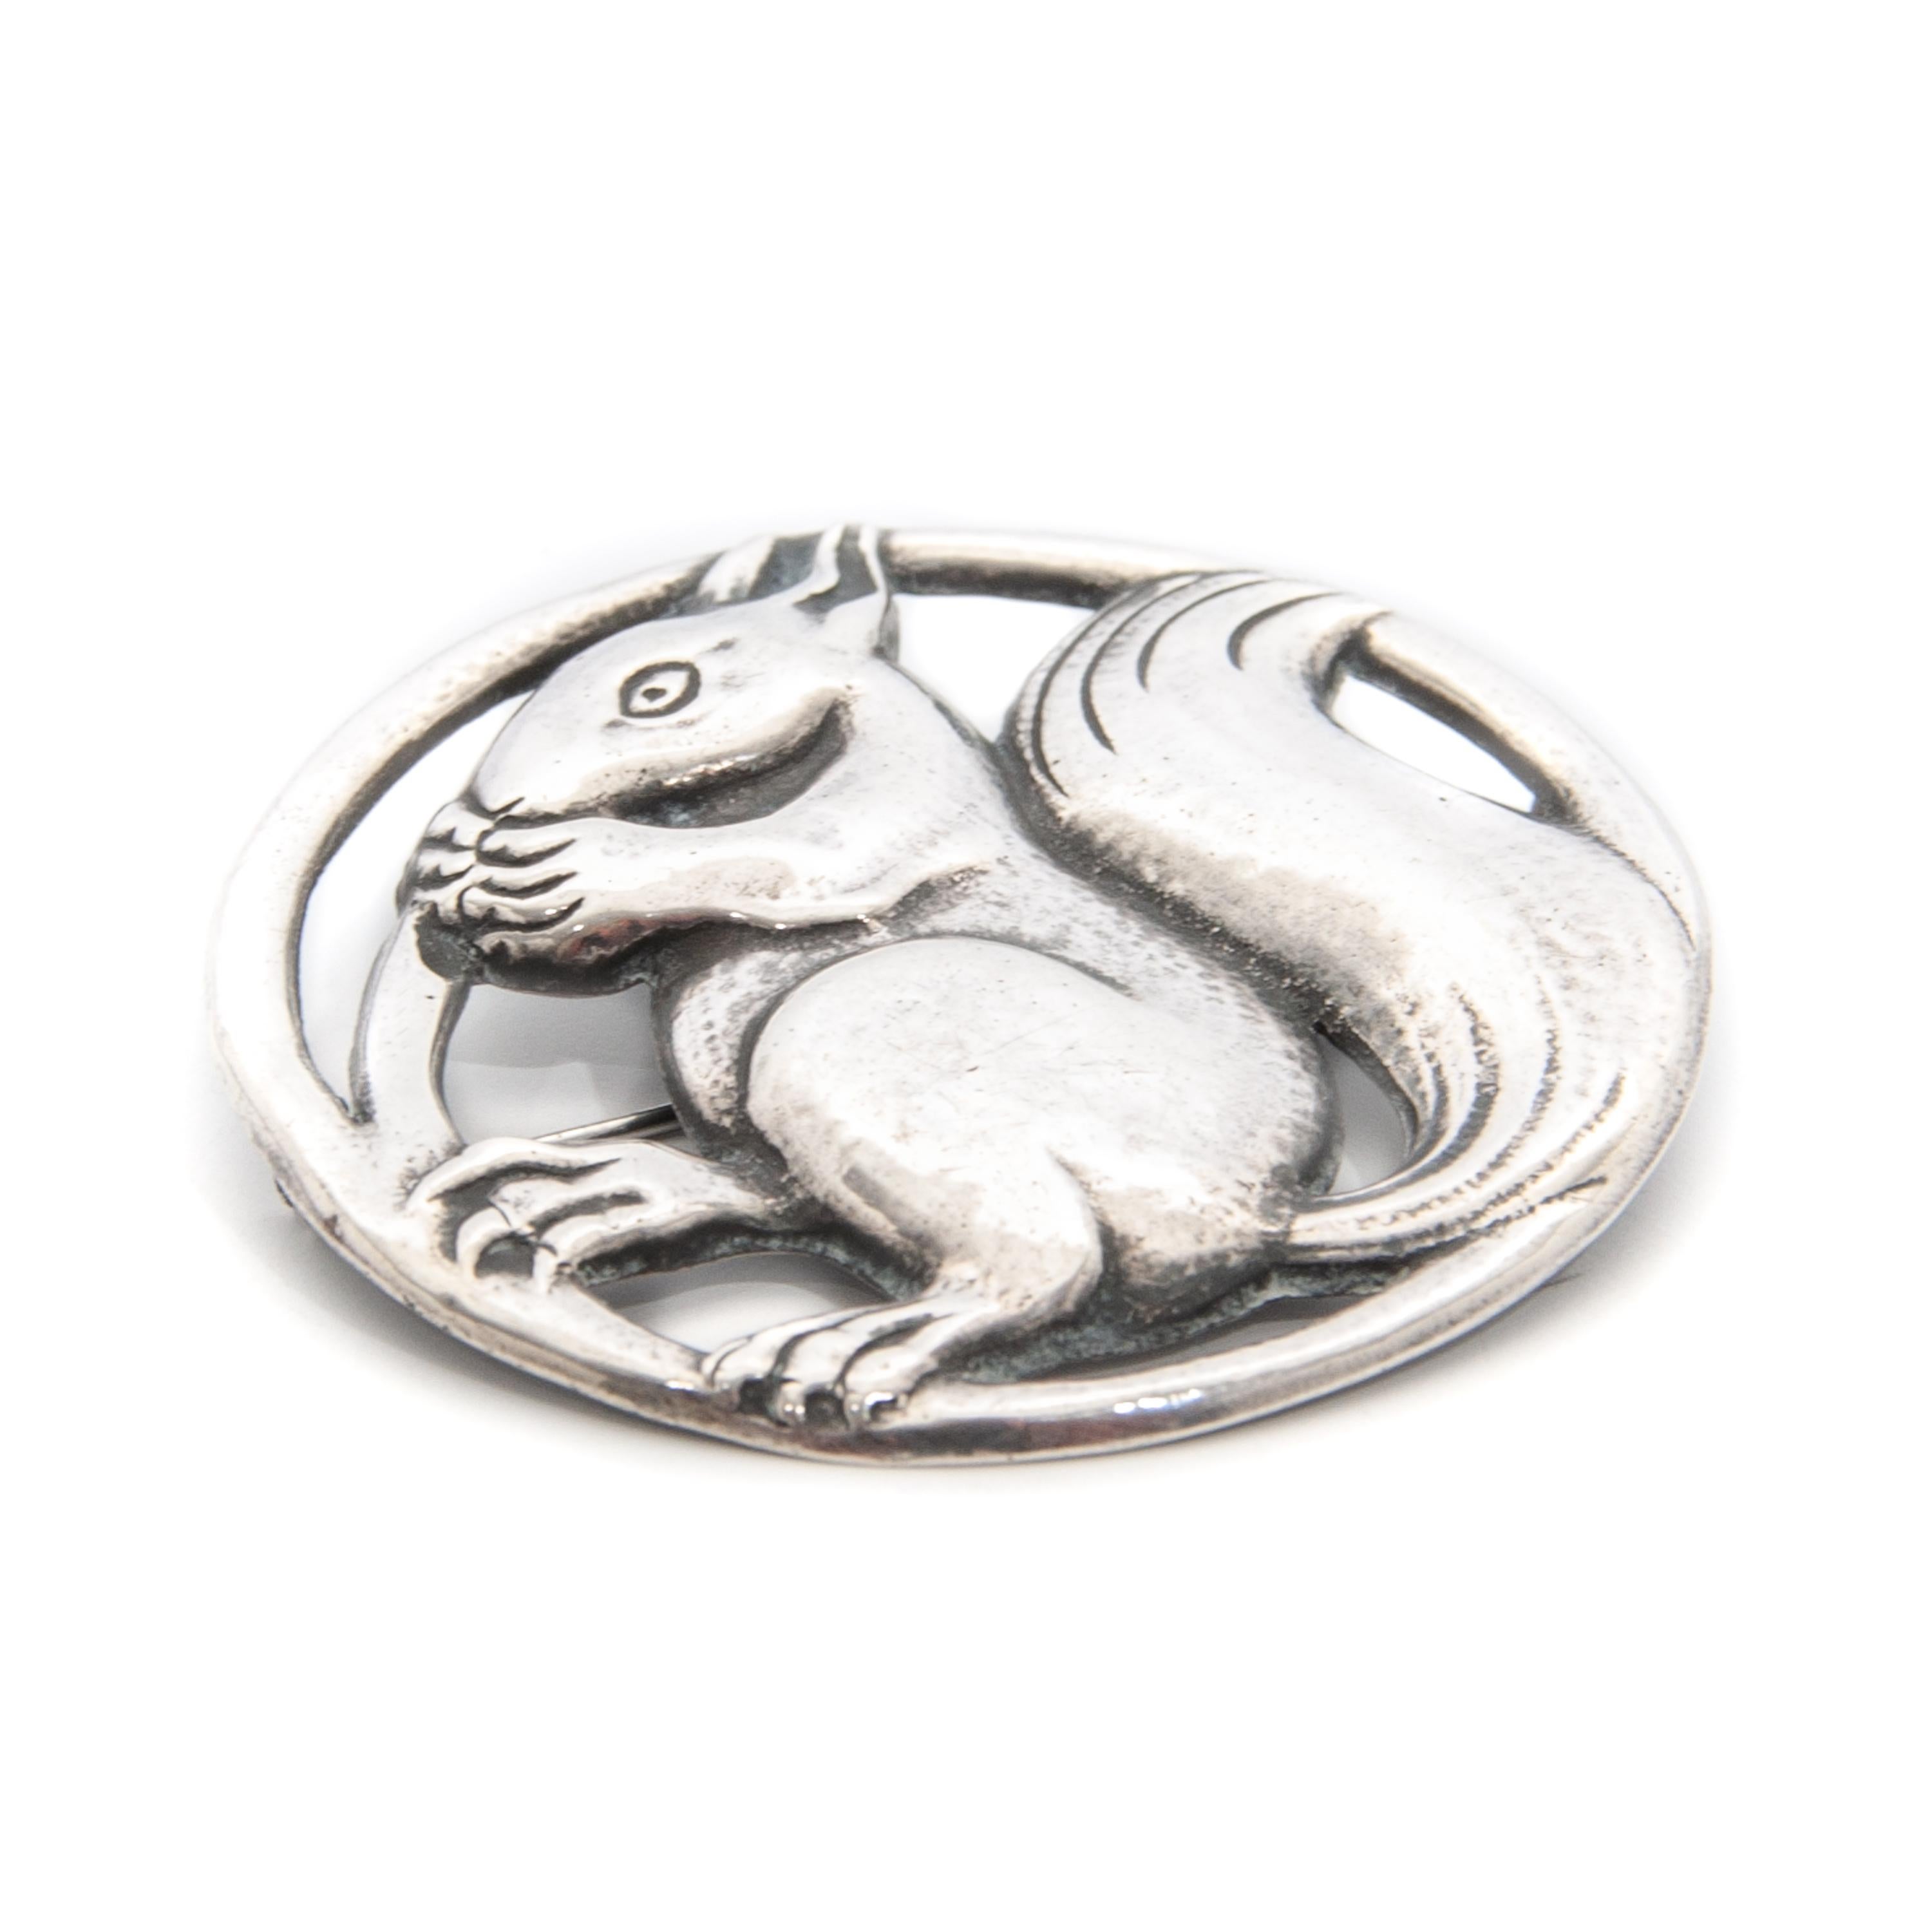 silver squirrels